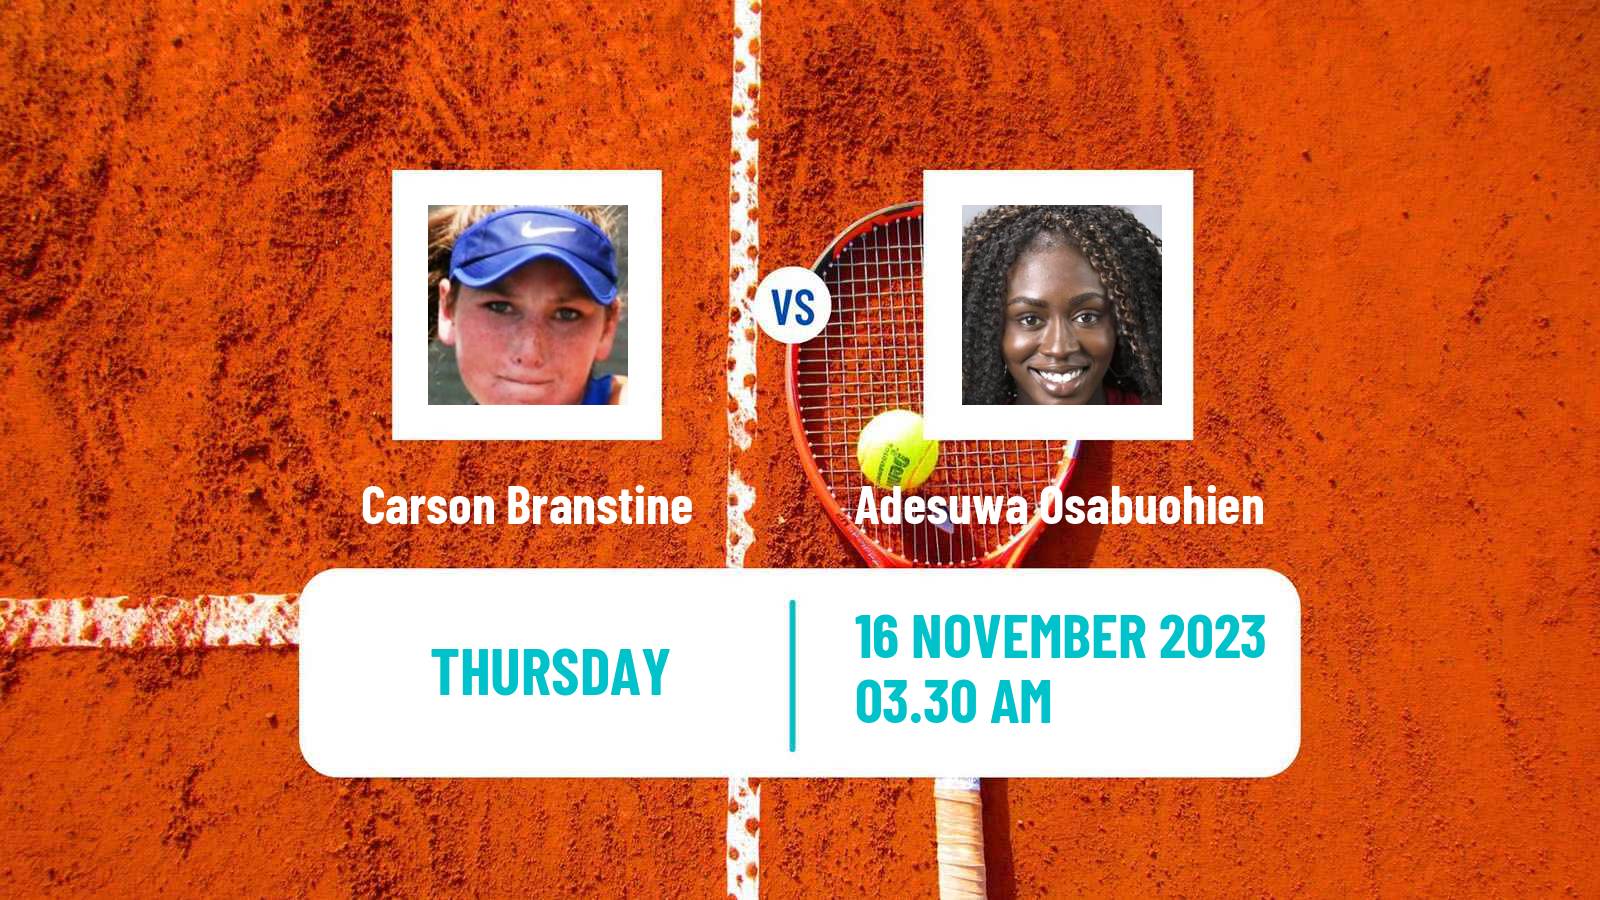 Tennis ITF W15 Monastir 40 Women Carson Branstine - Adesuwa Osabuohien